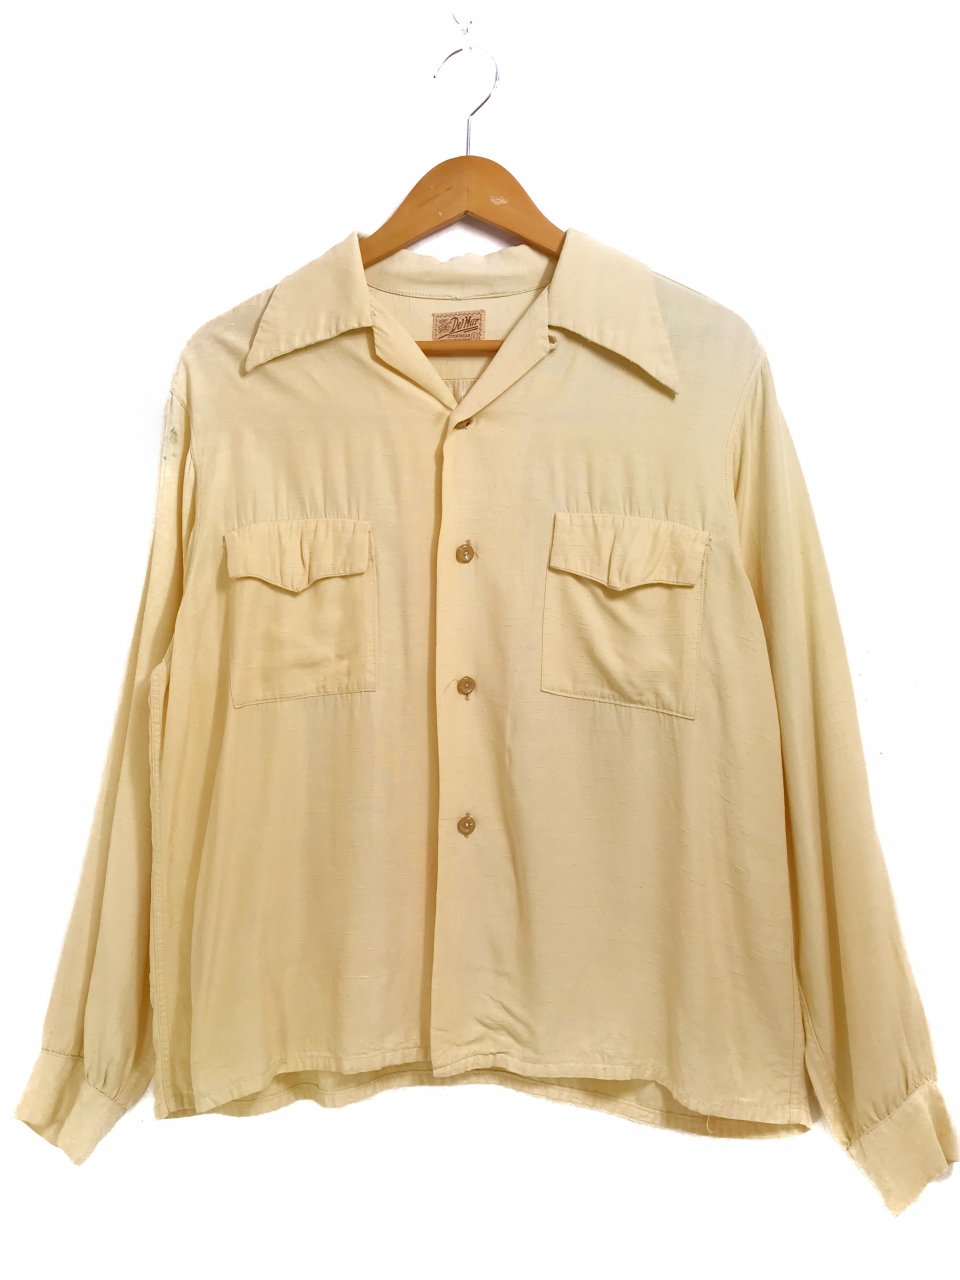 1950s VINTAGE レーヨンギャバシャツ/カスリ/オープンカラーシャツ